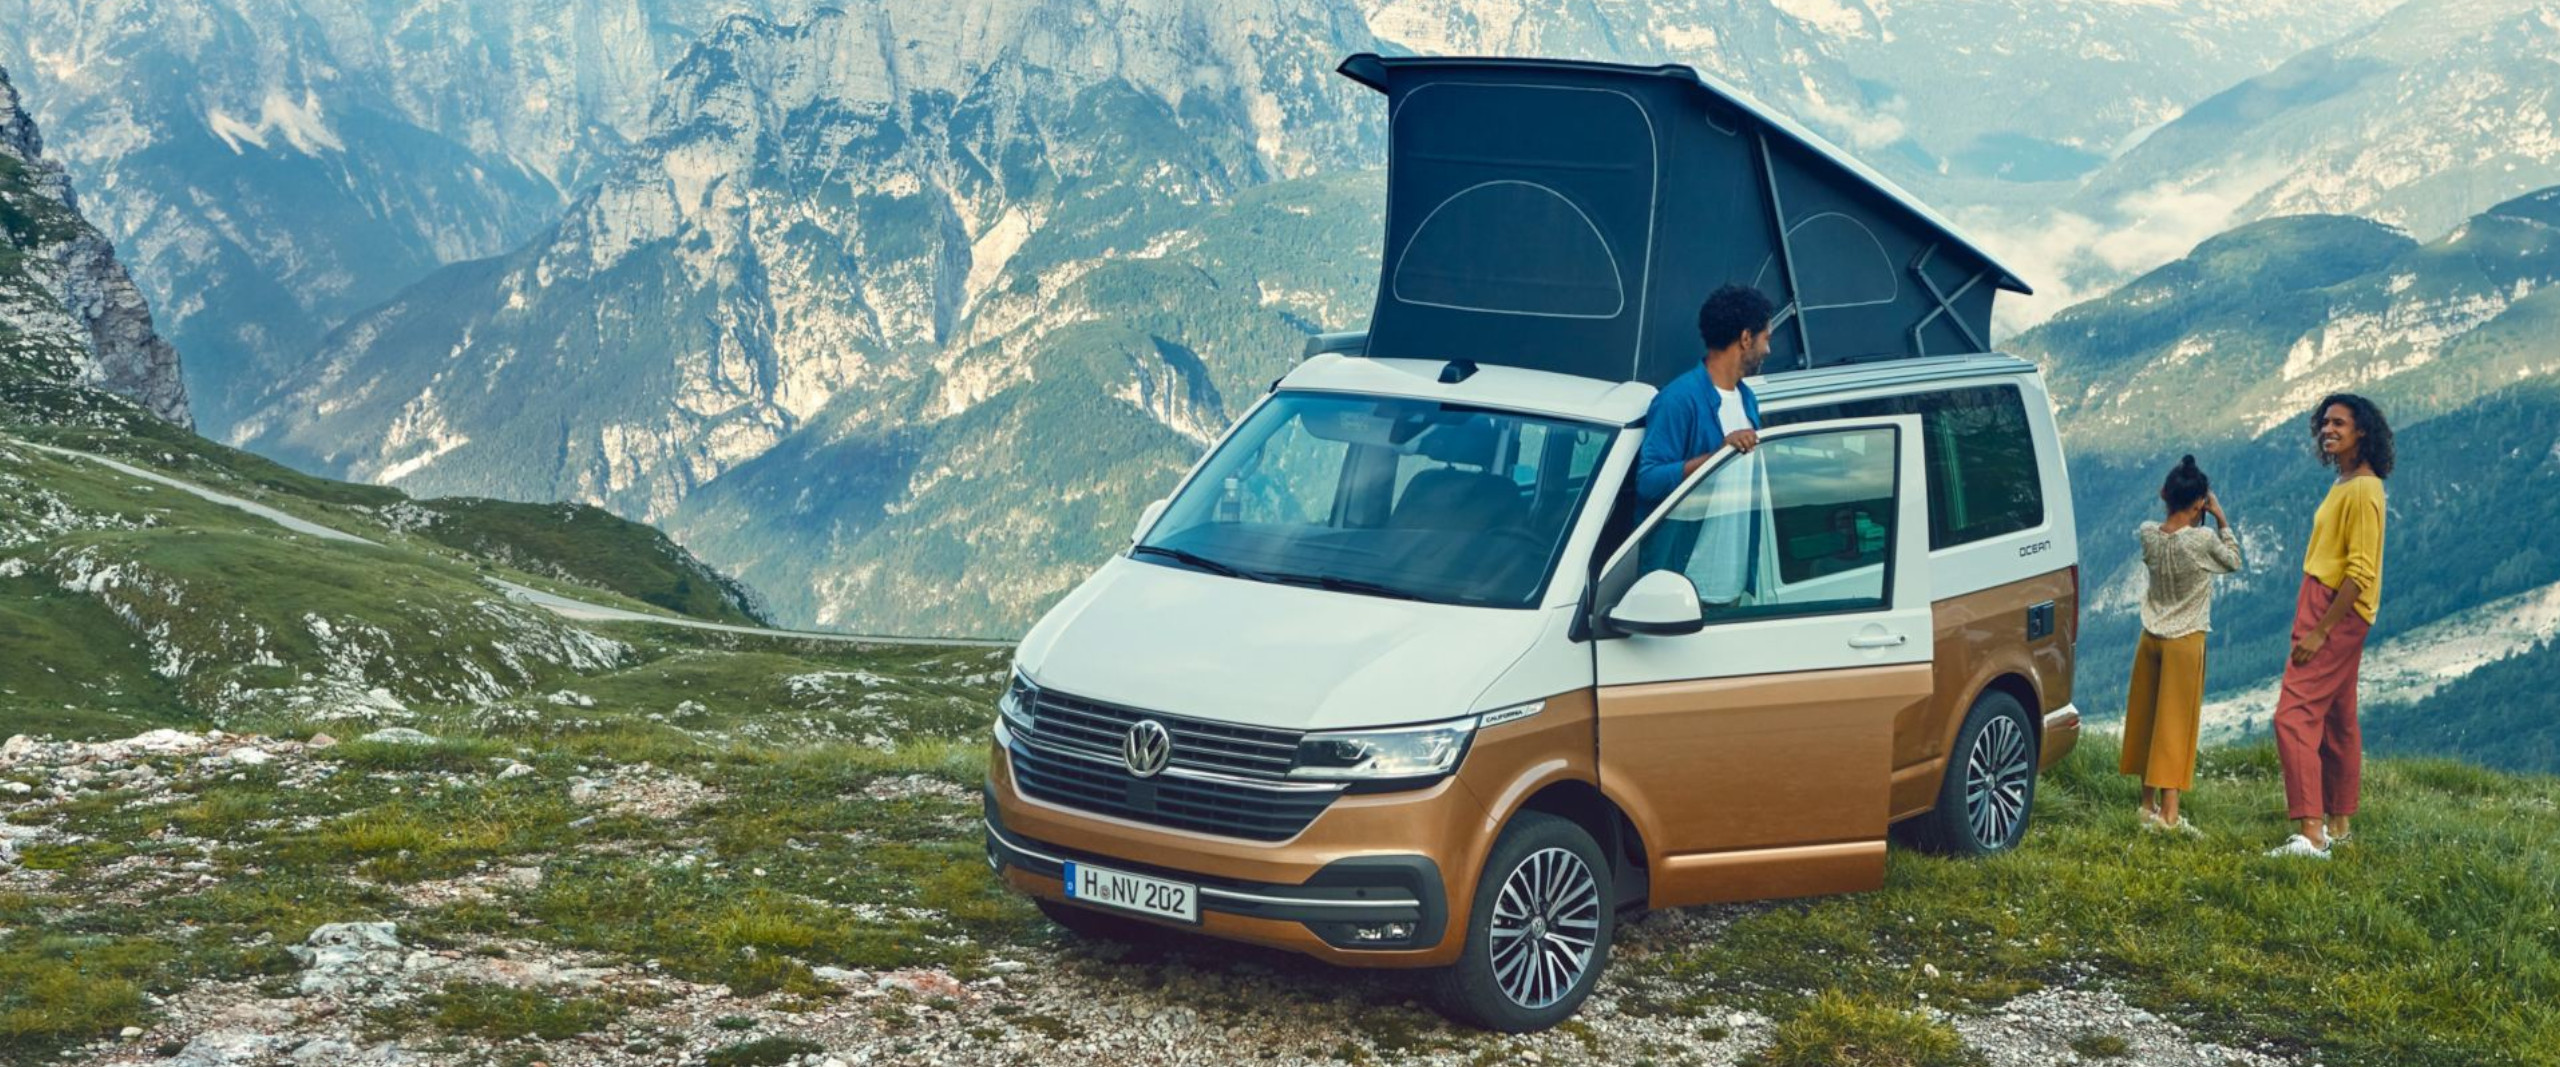 Campingauslfug in die Berge mit dem VW Transporter California